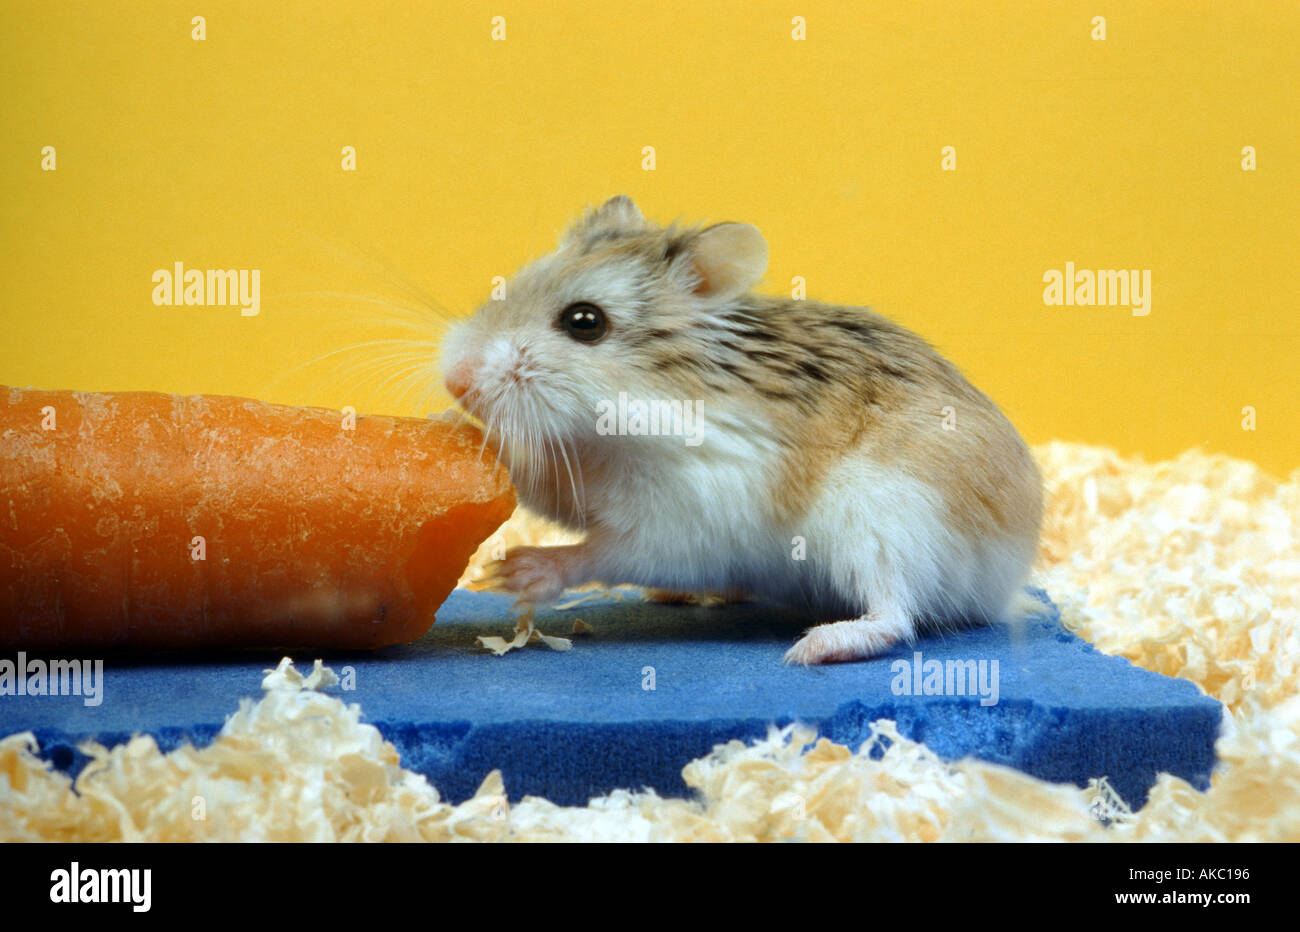 Roborowsky Hamster eating a carrot Stock Photo